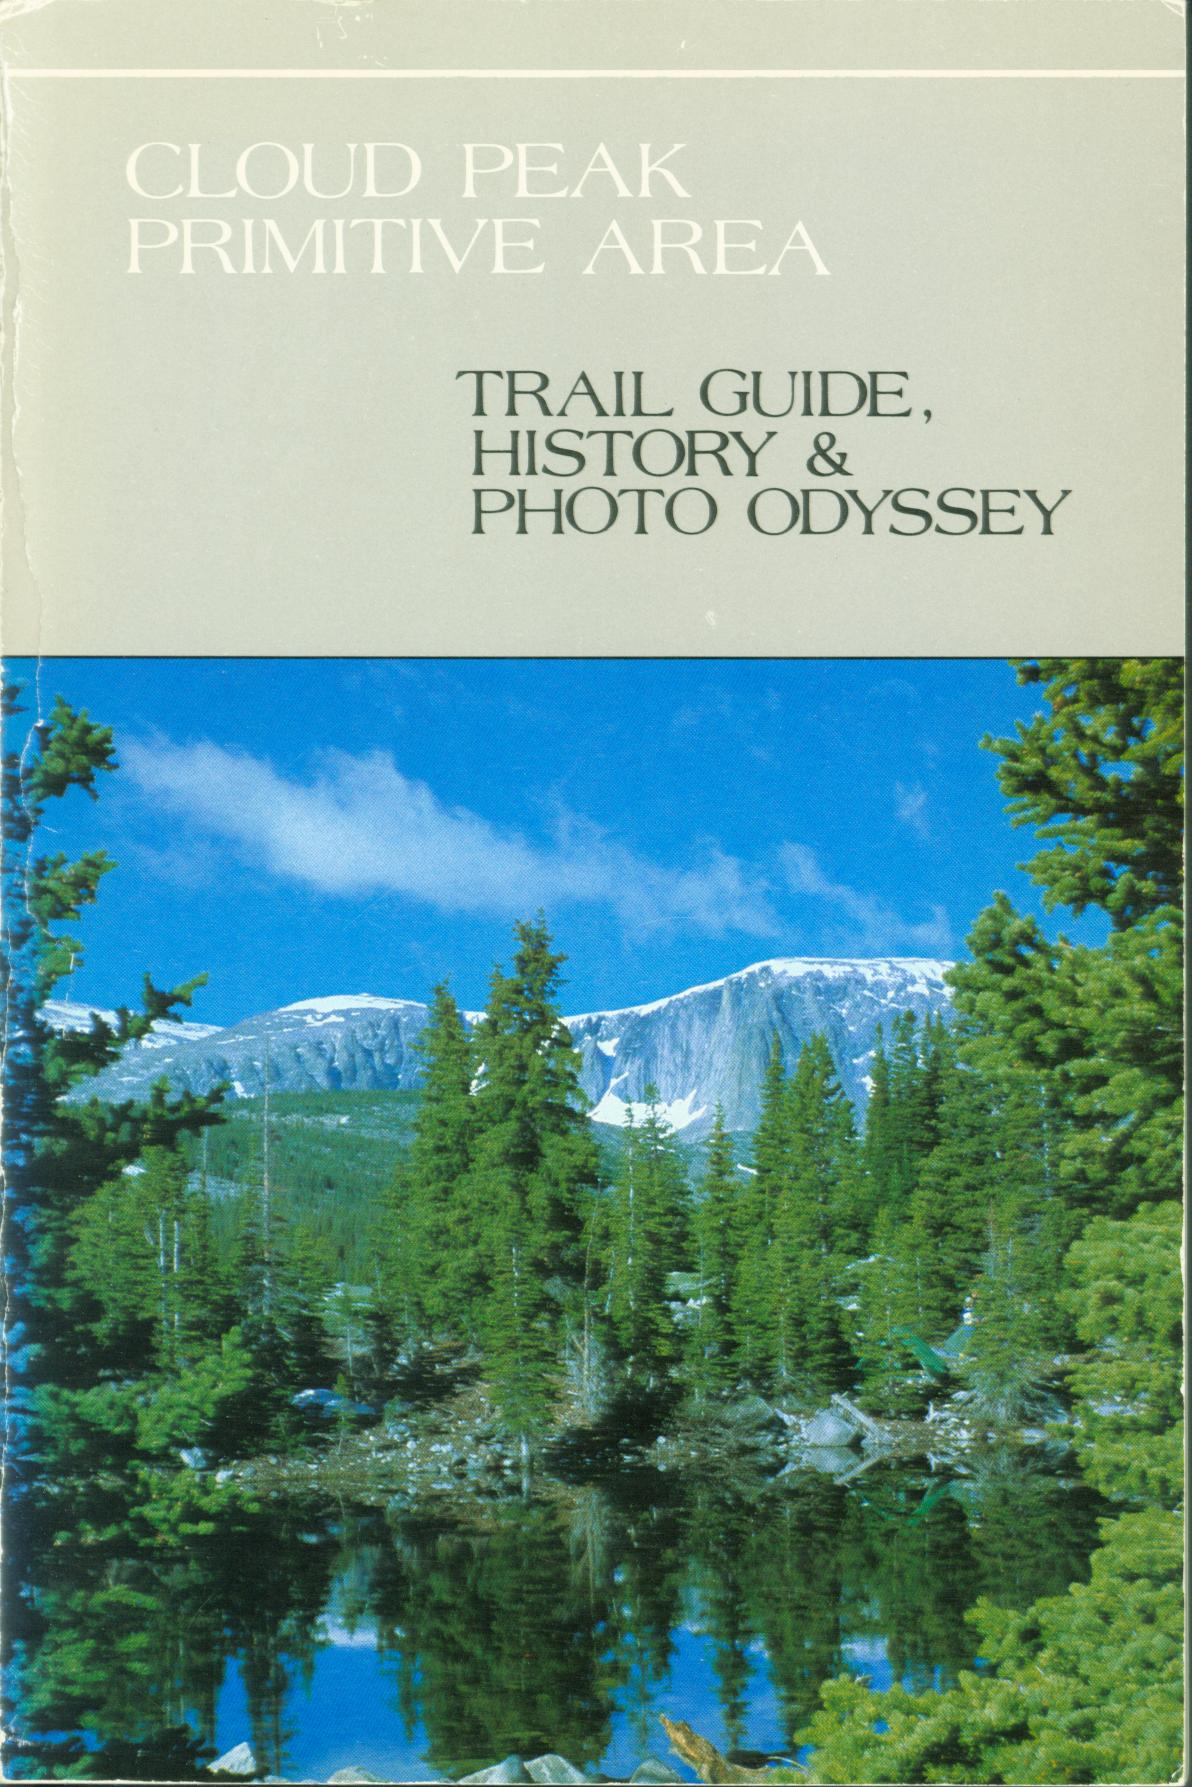 CLOUD PEAK PRIMITIVE AREA: trail guide, history & photo odyssey.